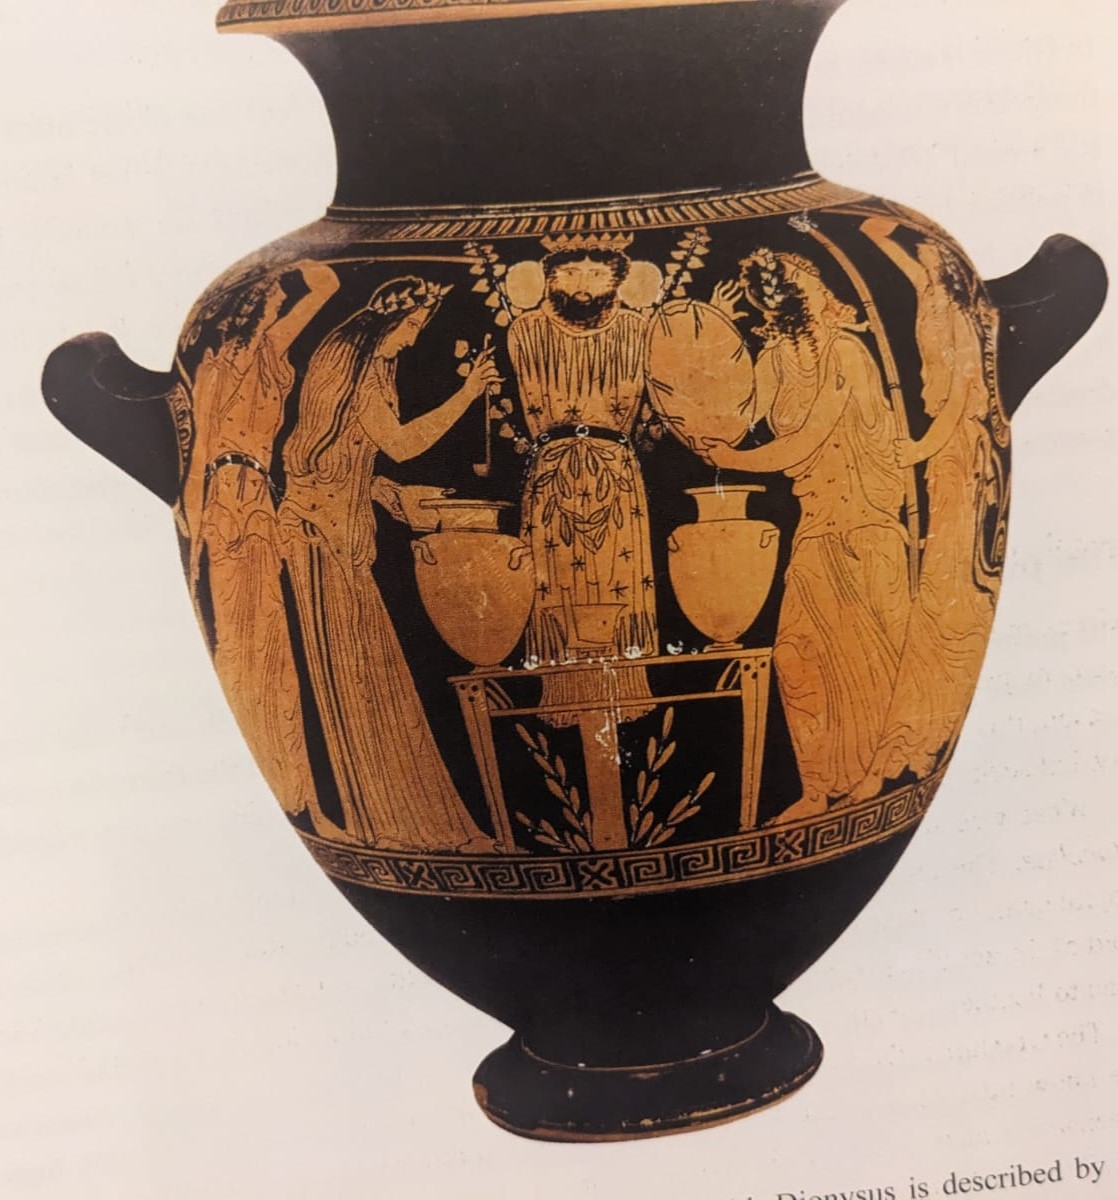 <p>Where was the Maenad vase found?</p>